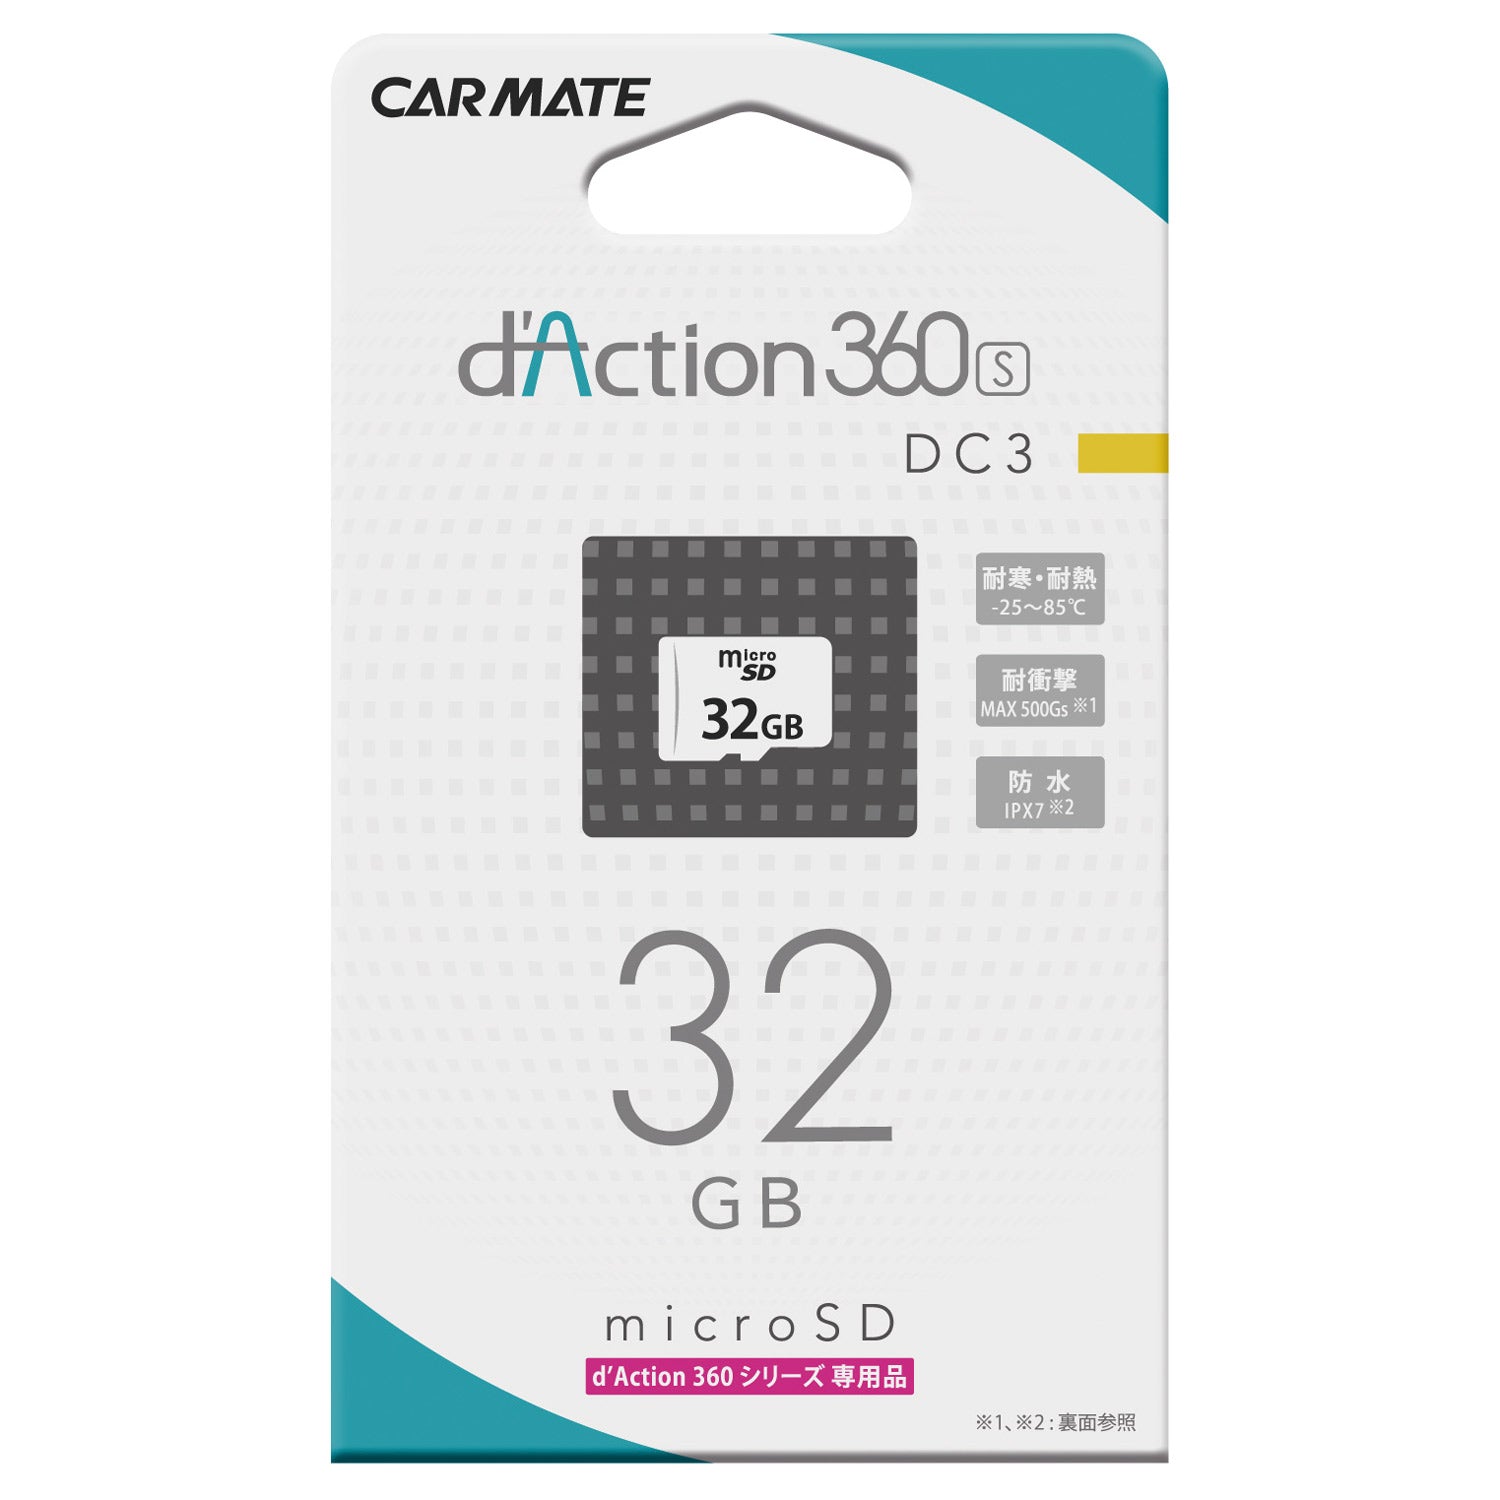 DC3A 32GB Micro Card – Carmate USA, Inc.